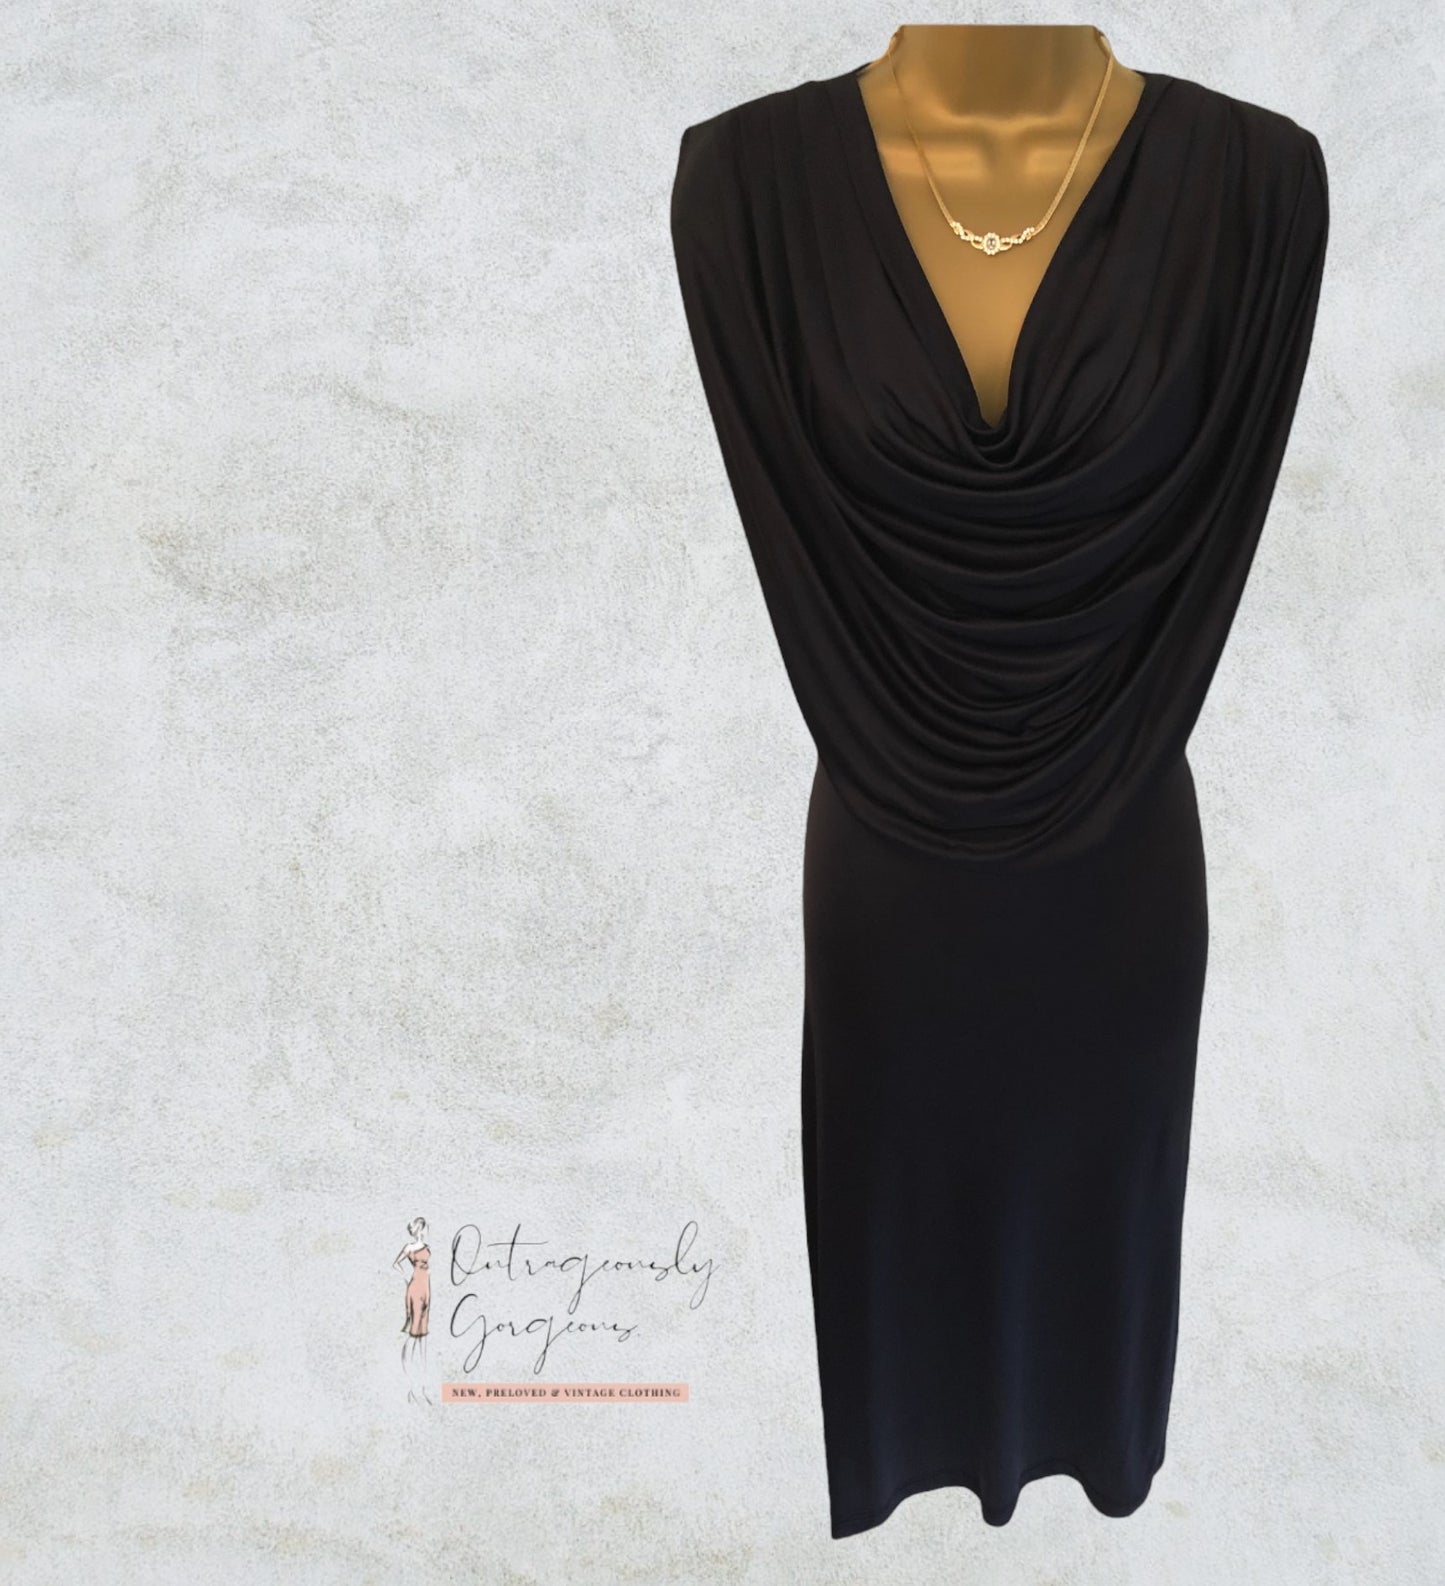 Jean Colonna Rare Vintage Black Silk Jersey Cowl Neck Dress UK 12 US 8 EU 40 Timeless Fashions